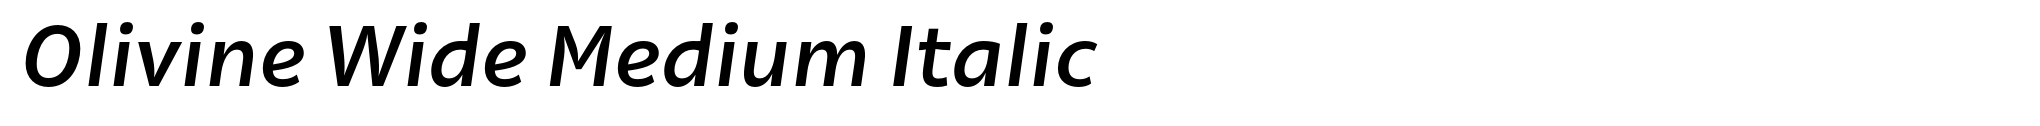 Olivine Wide Medium Italic image